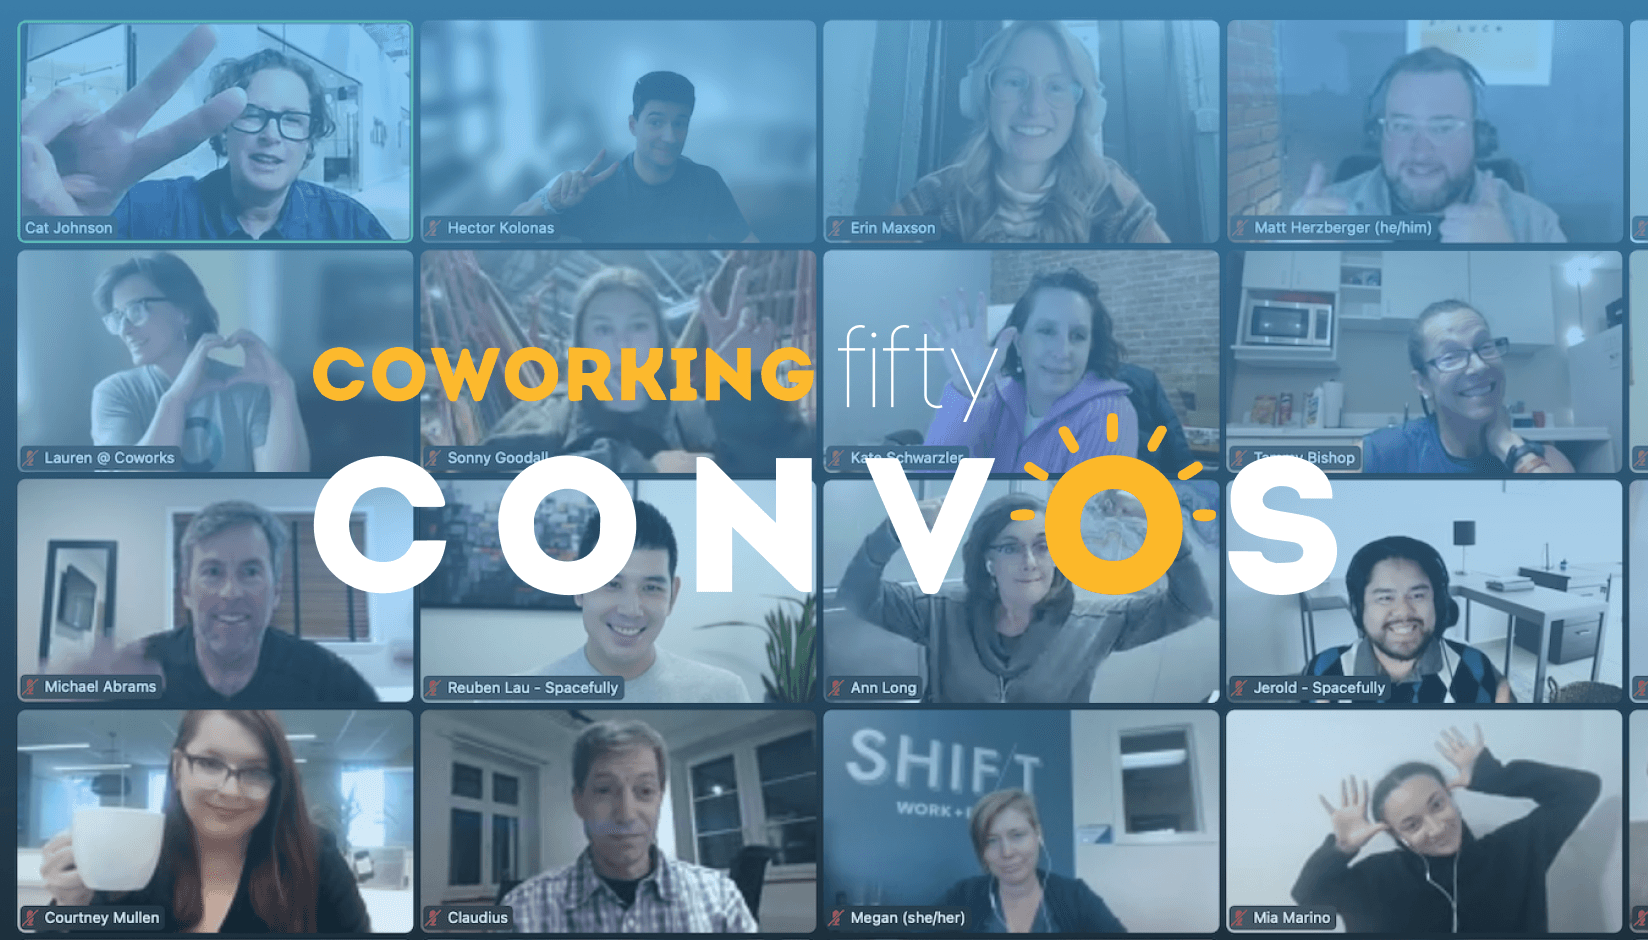 Big 5-0! Coworking Convos Hits Milestone!